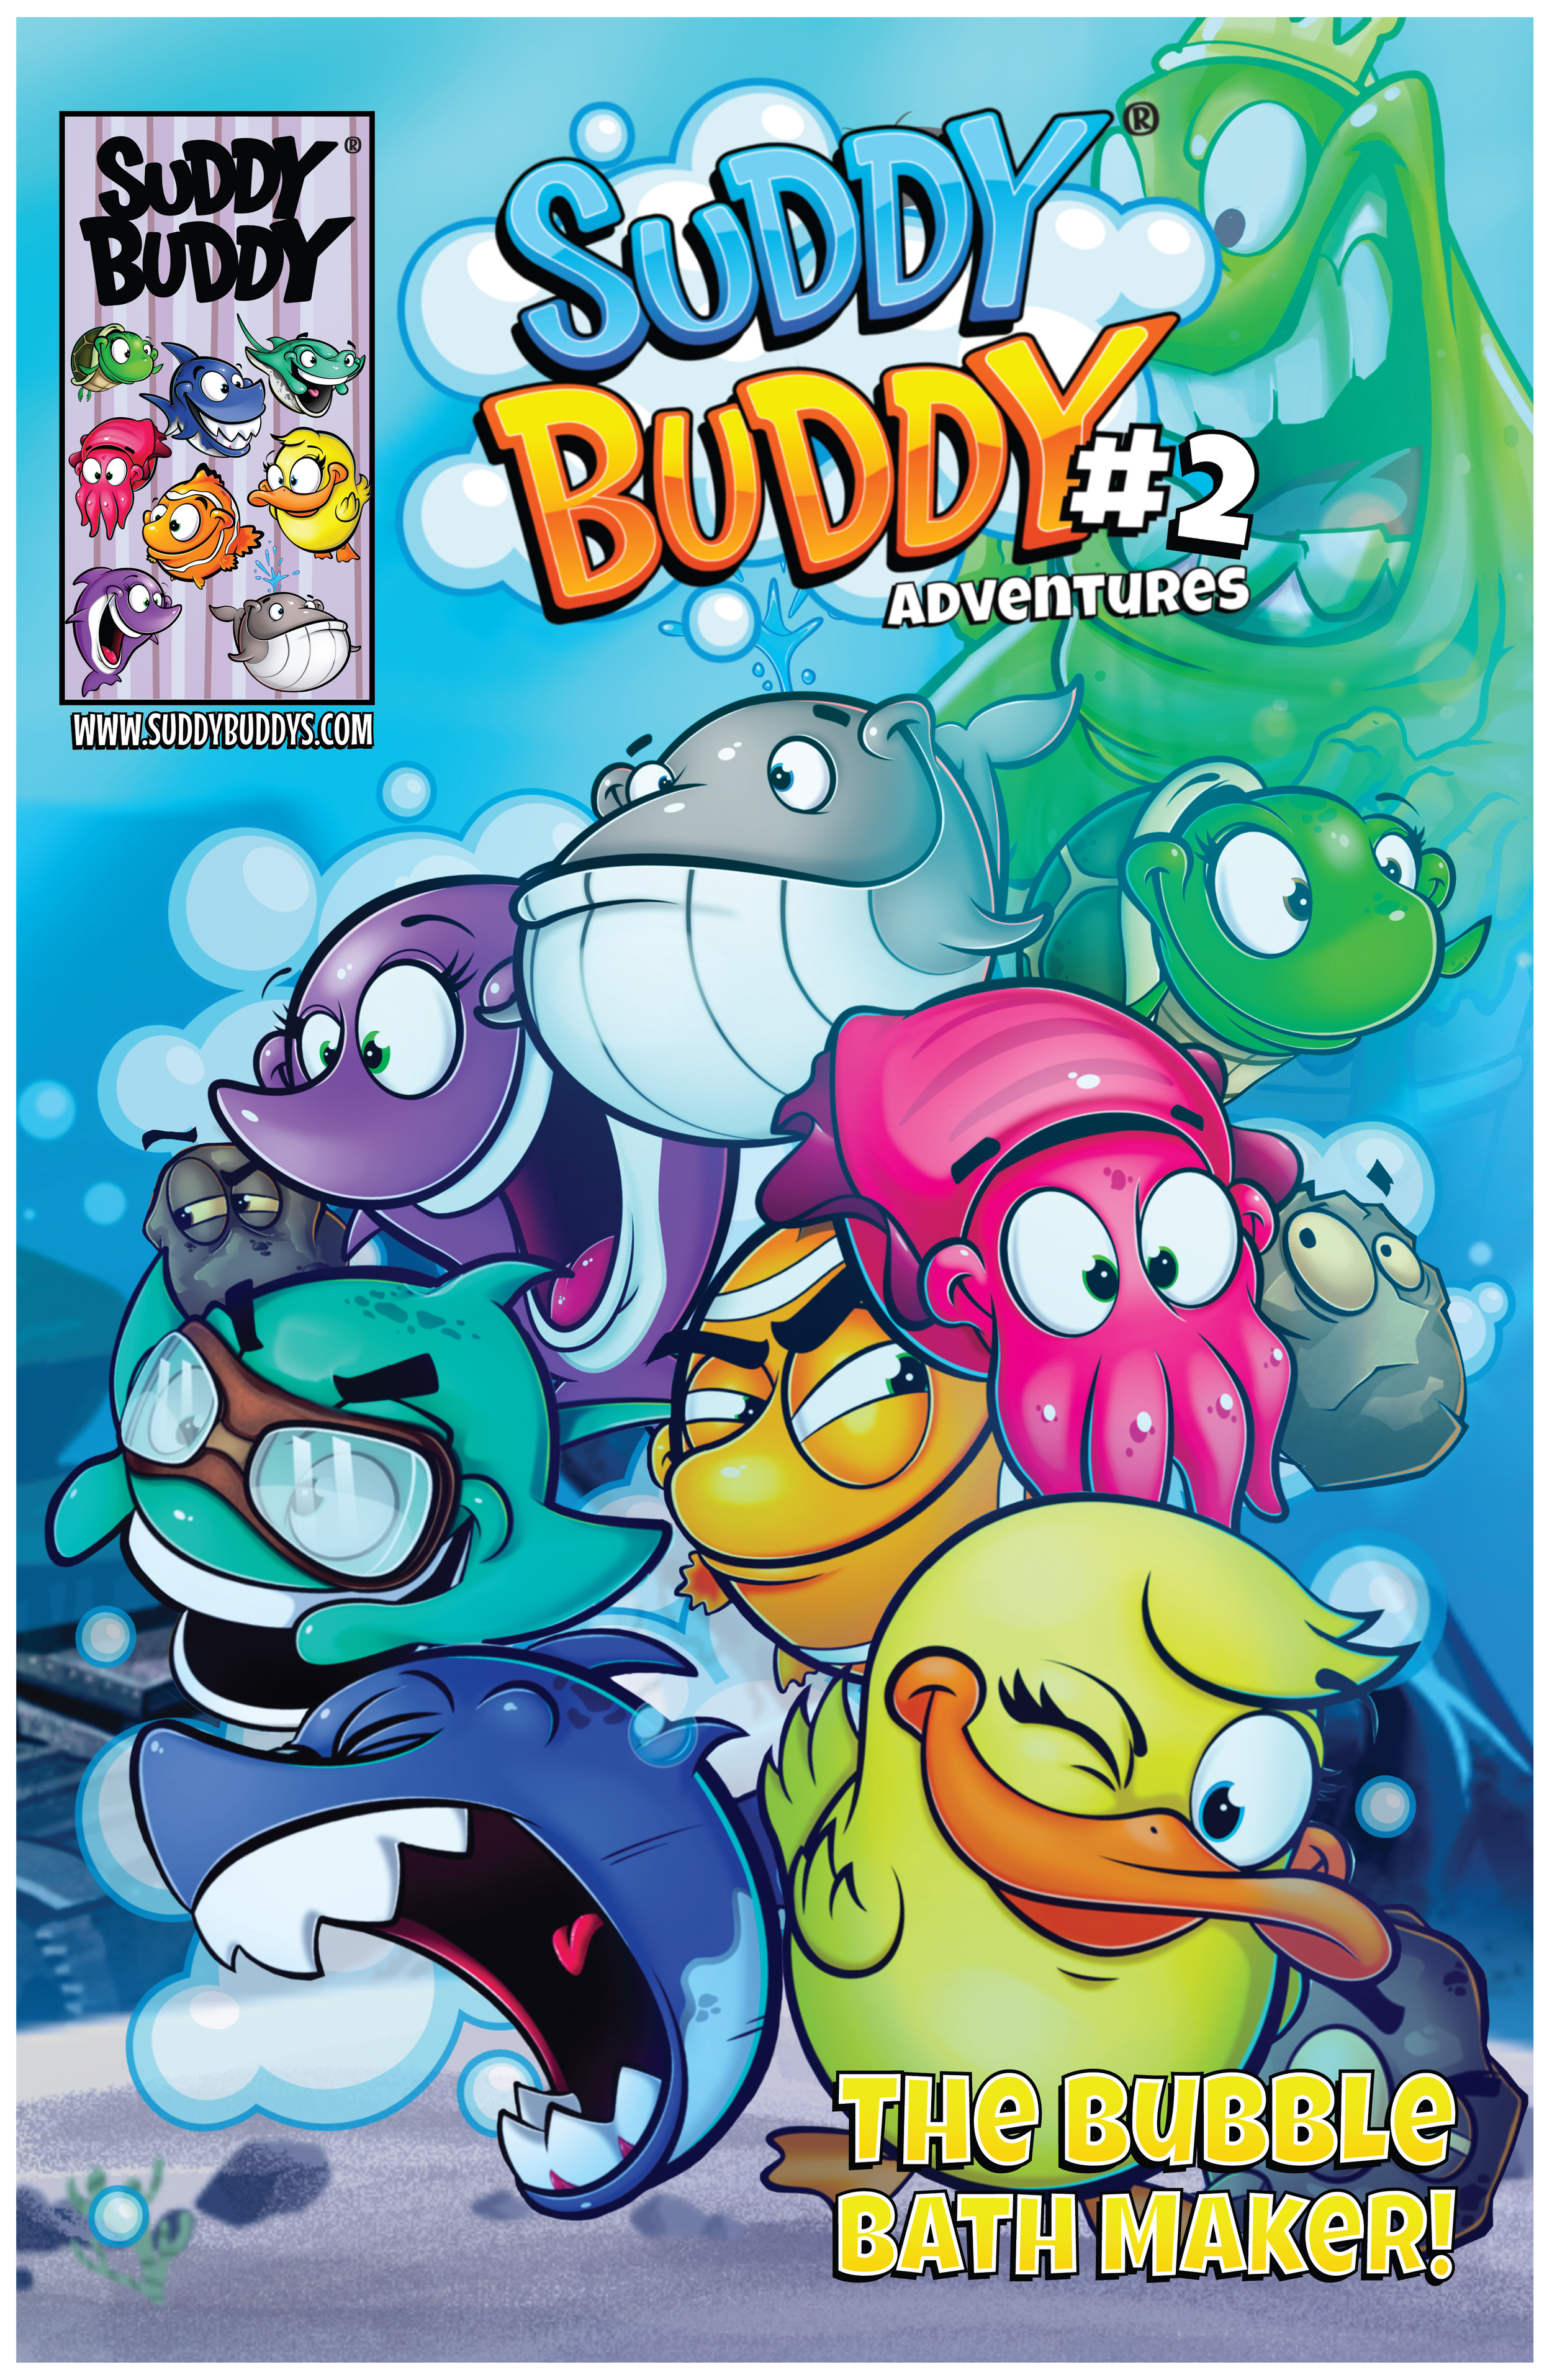 Suddy Buddy Comic vol 2_cover.png